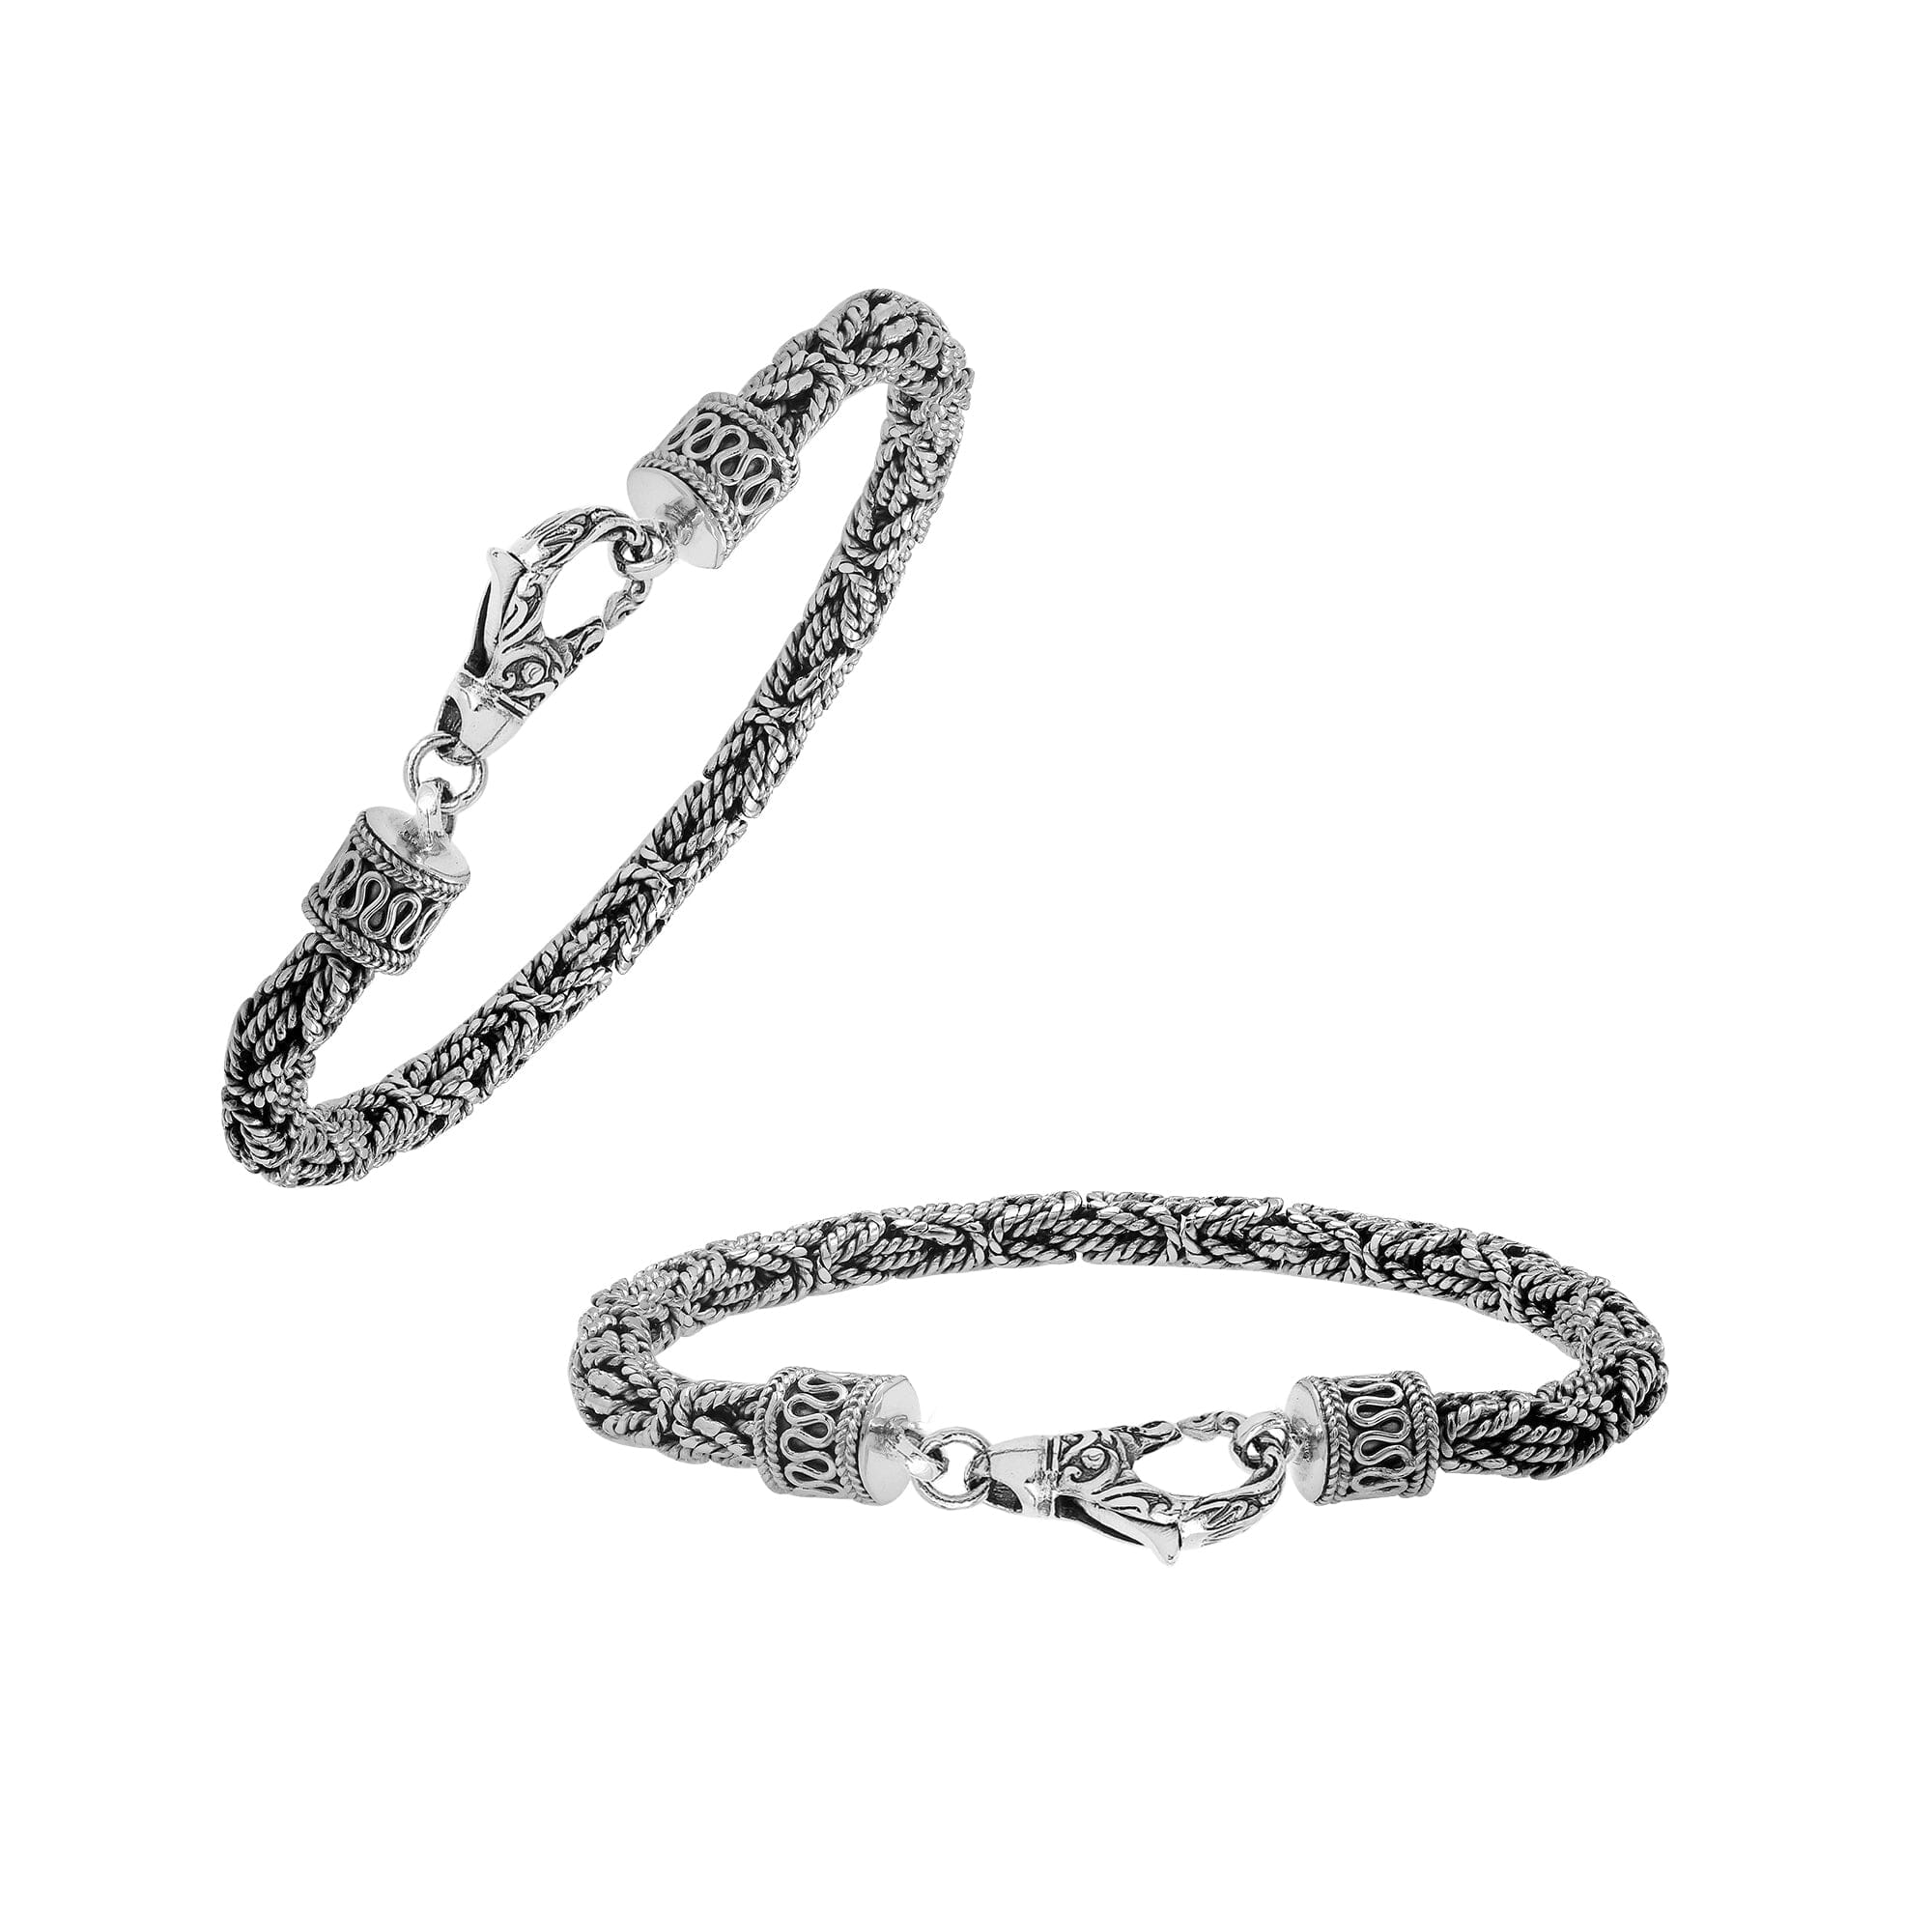 Swarovski 6 mm Crystal Bracelet in Sterling Silver Clasp, Wedding/Bridal  Crystal Bracelet, Crystal Bracelet, Crystal Jewelry,